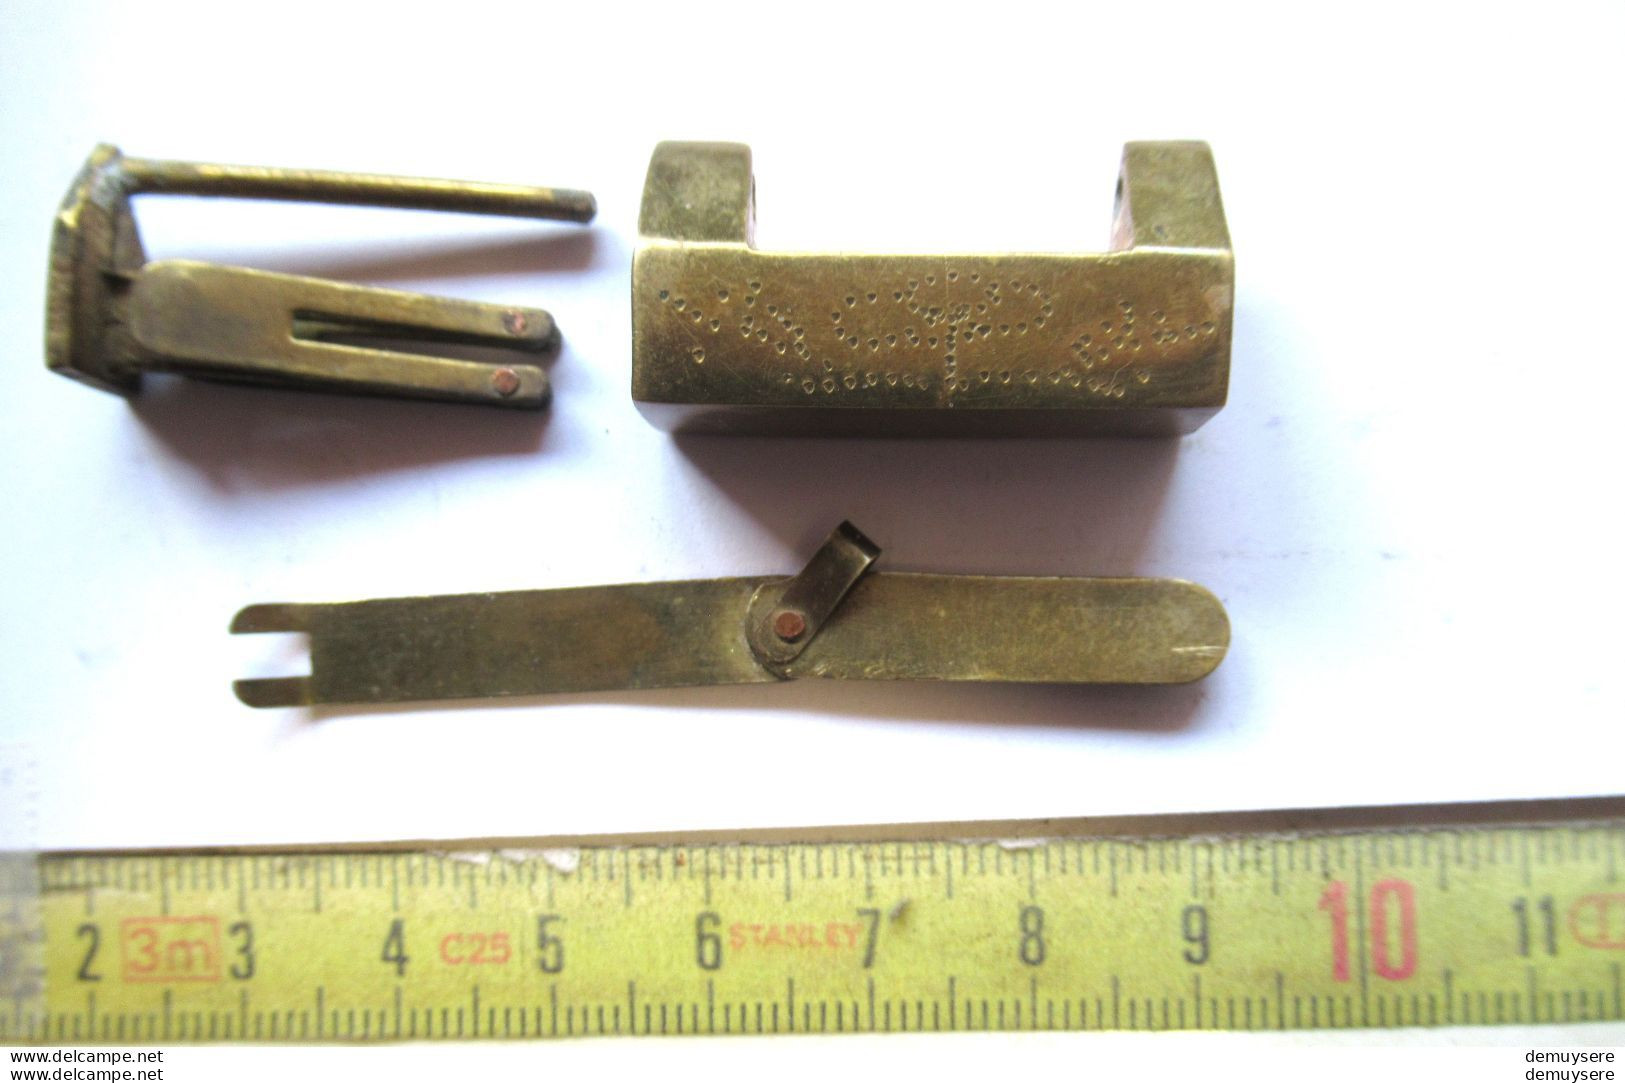 0404 04 - LADE A -10-5-  CARDENAS CHINOIS - CHINEES HANGSLOT - Antike Werkzeuge